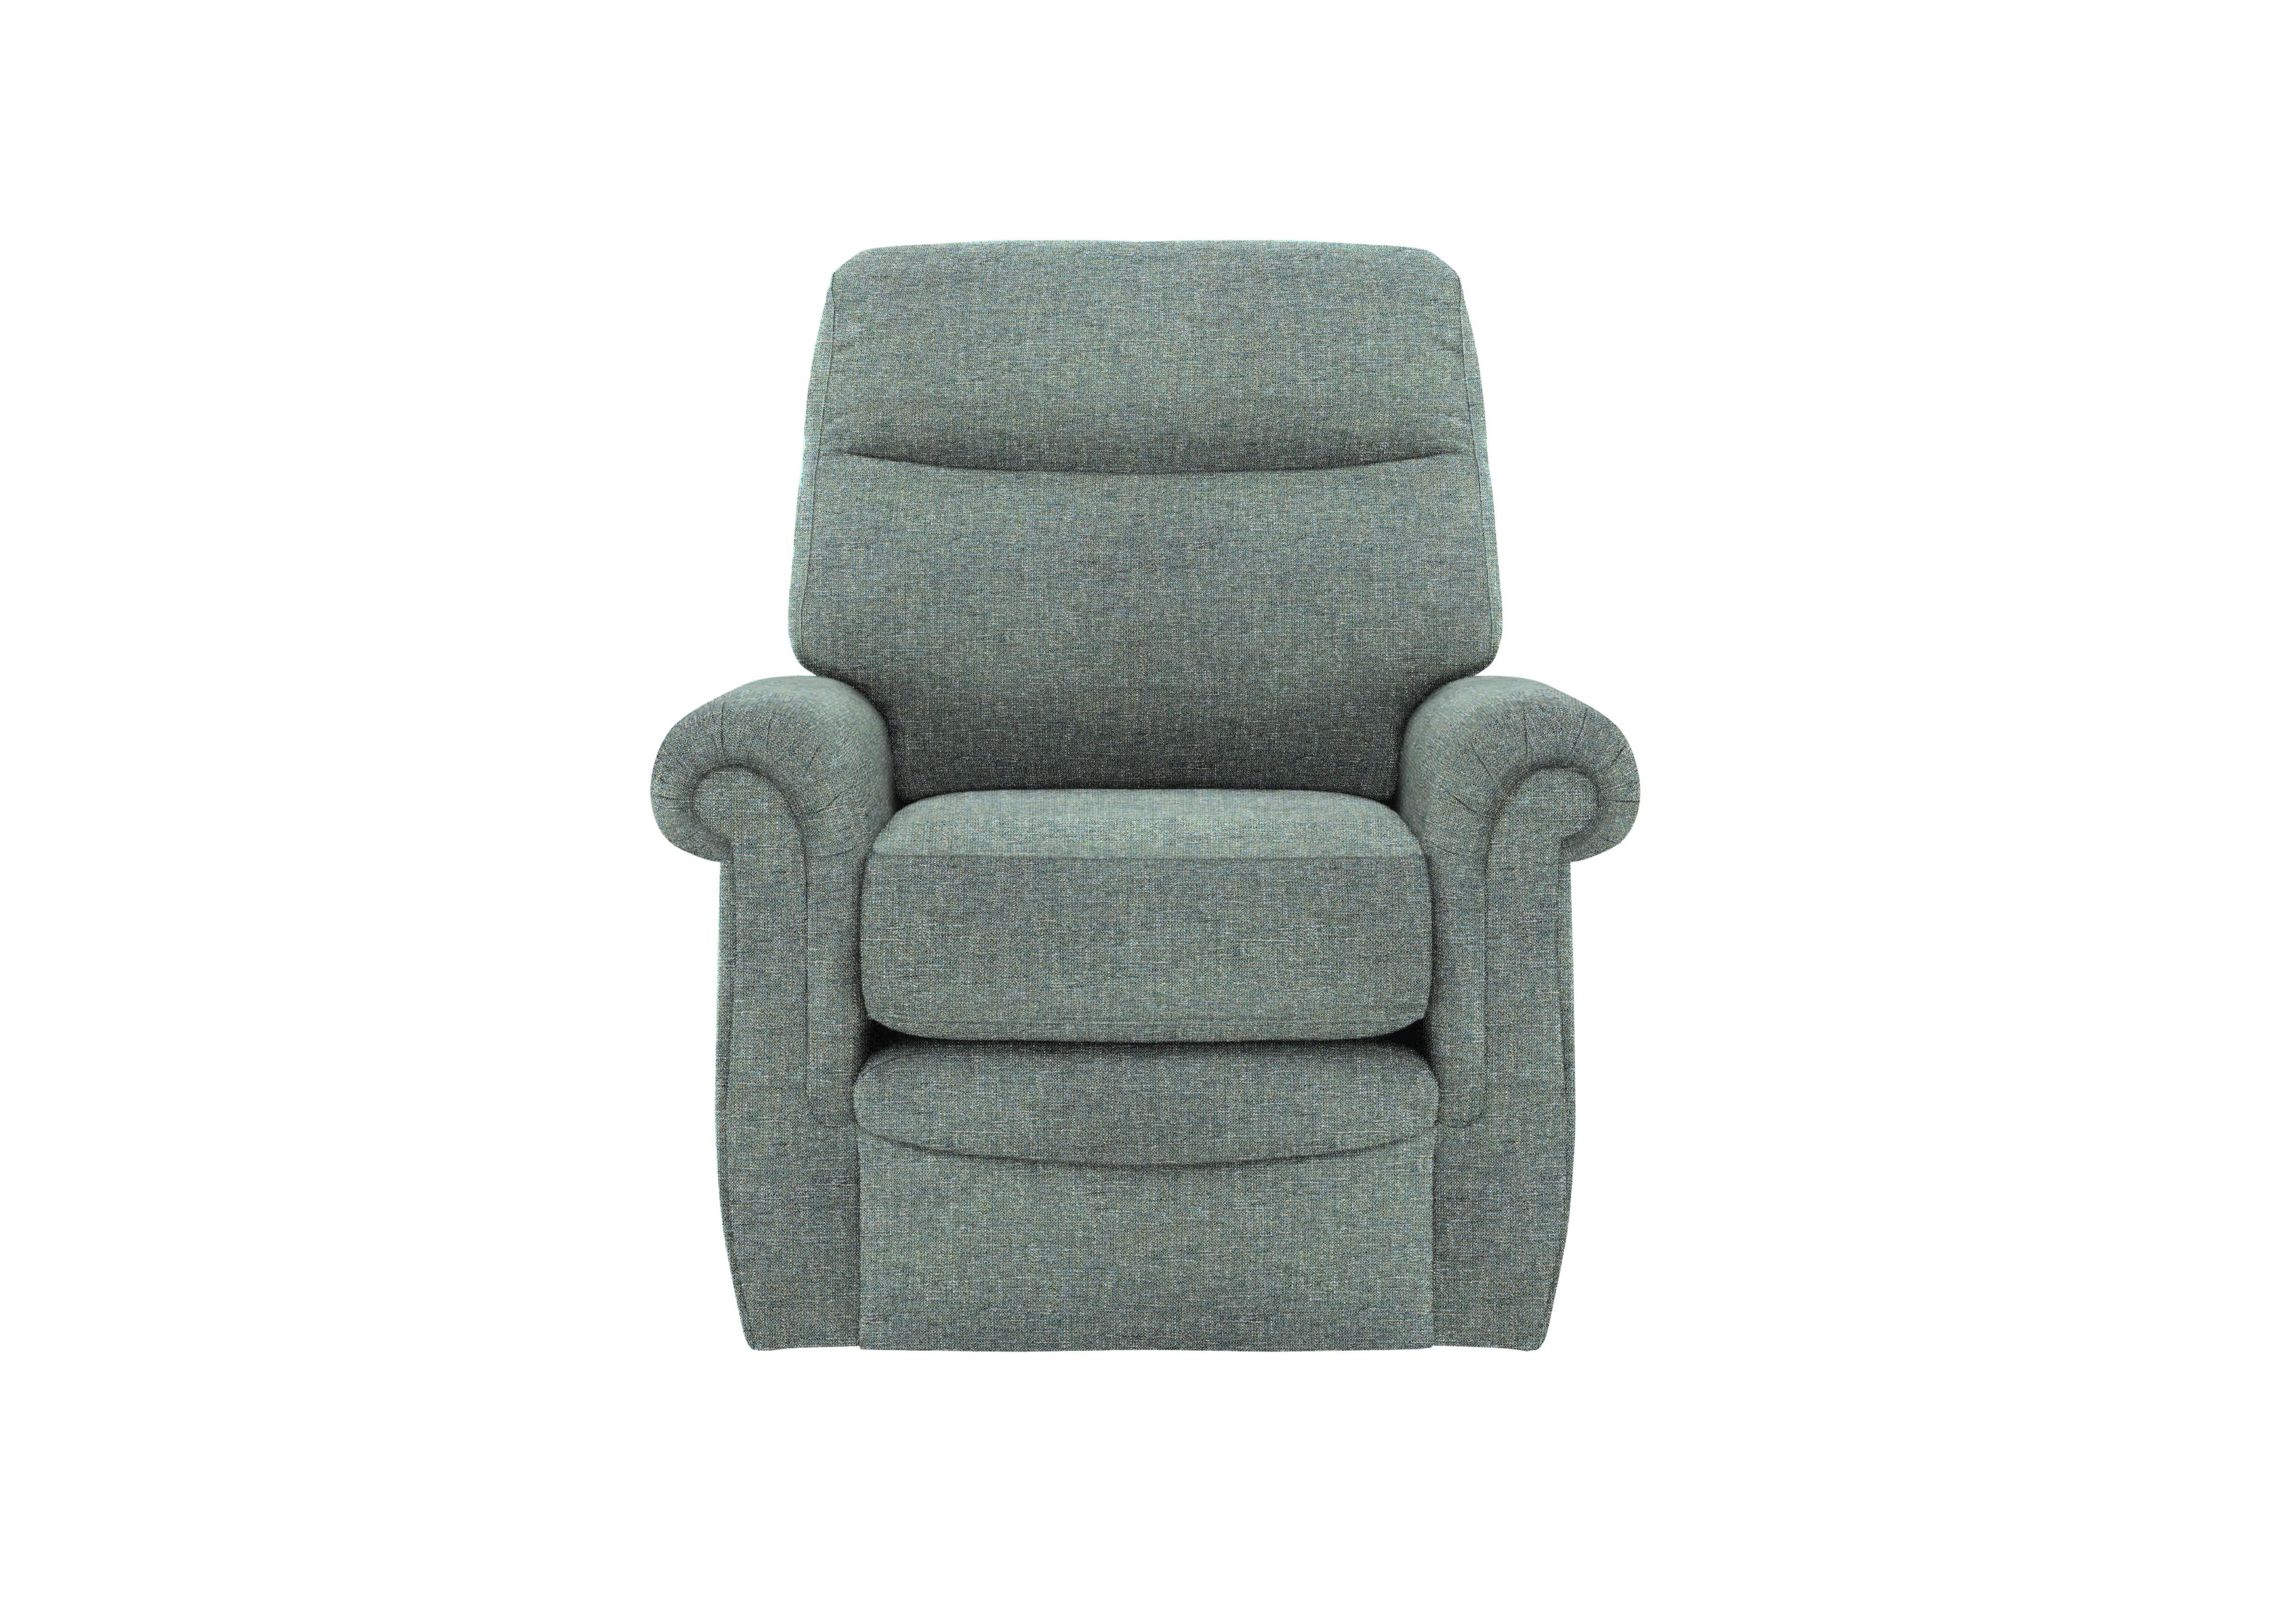 Avon Fabric Armchair in A020 Dapple Kingfisher on Furniture Village